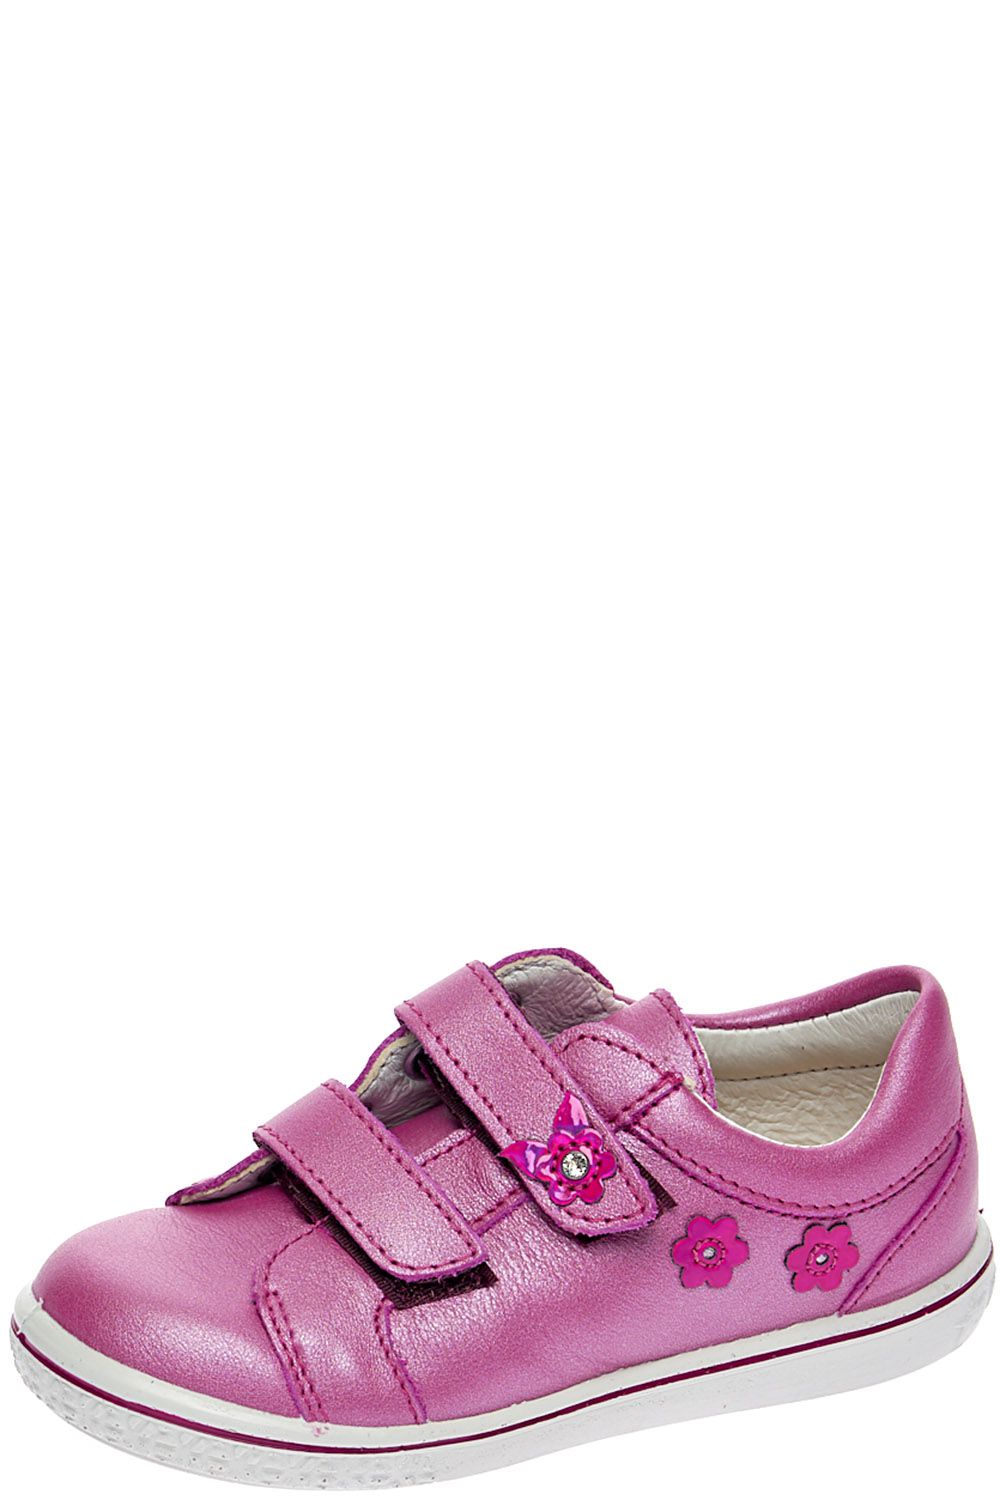 Ботинки Pepino, размер 24, цвет розовый